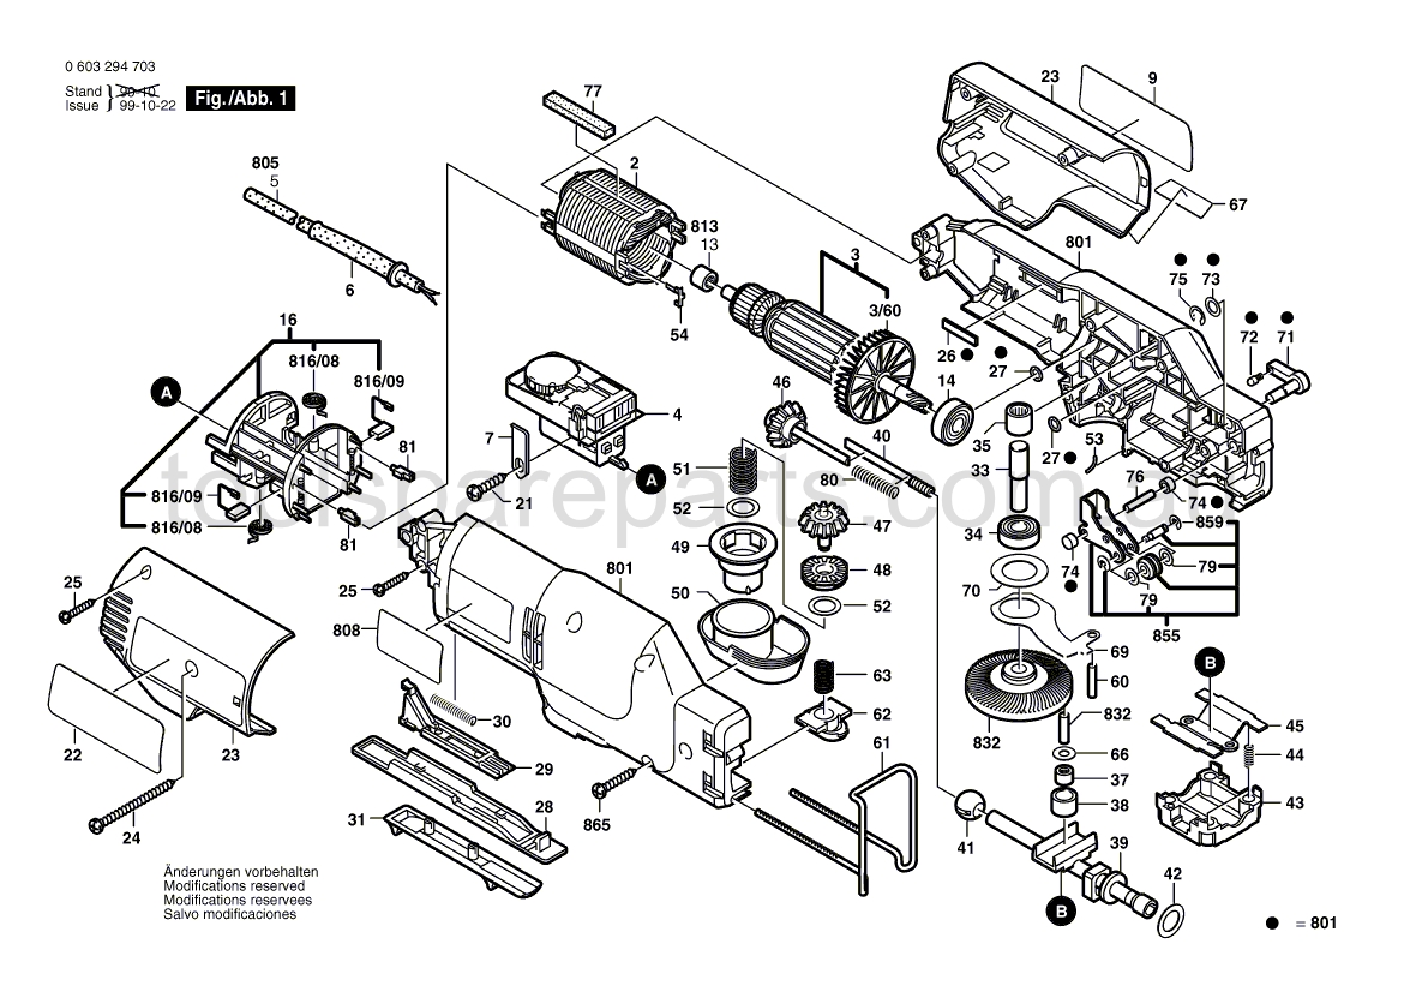 Bosch PMS 400 PE 0603294737  Diagram 1